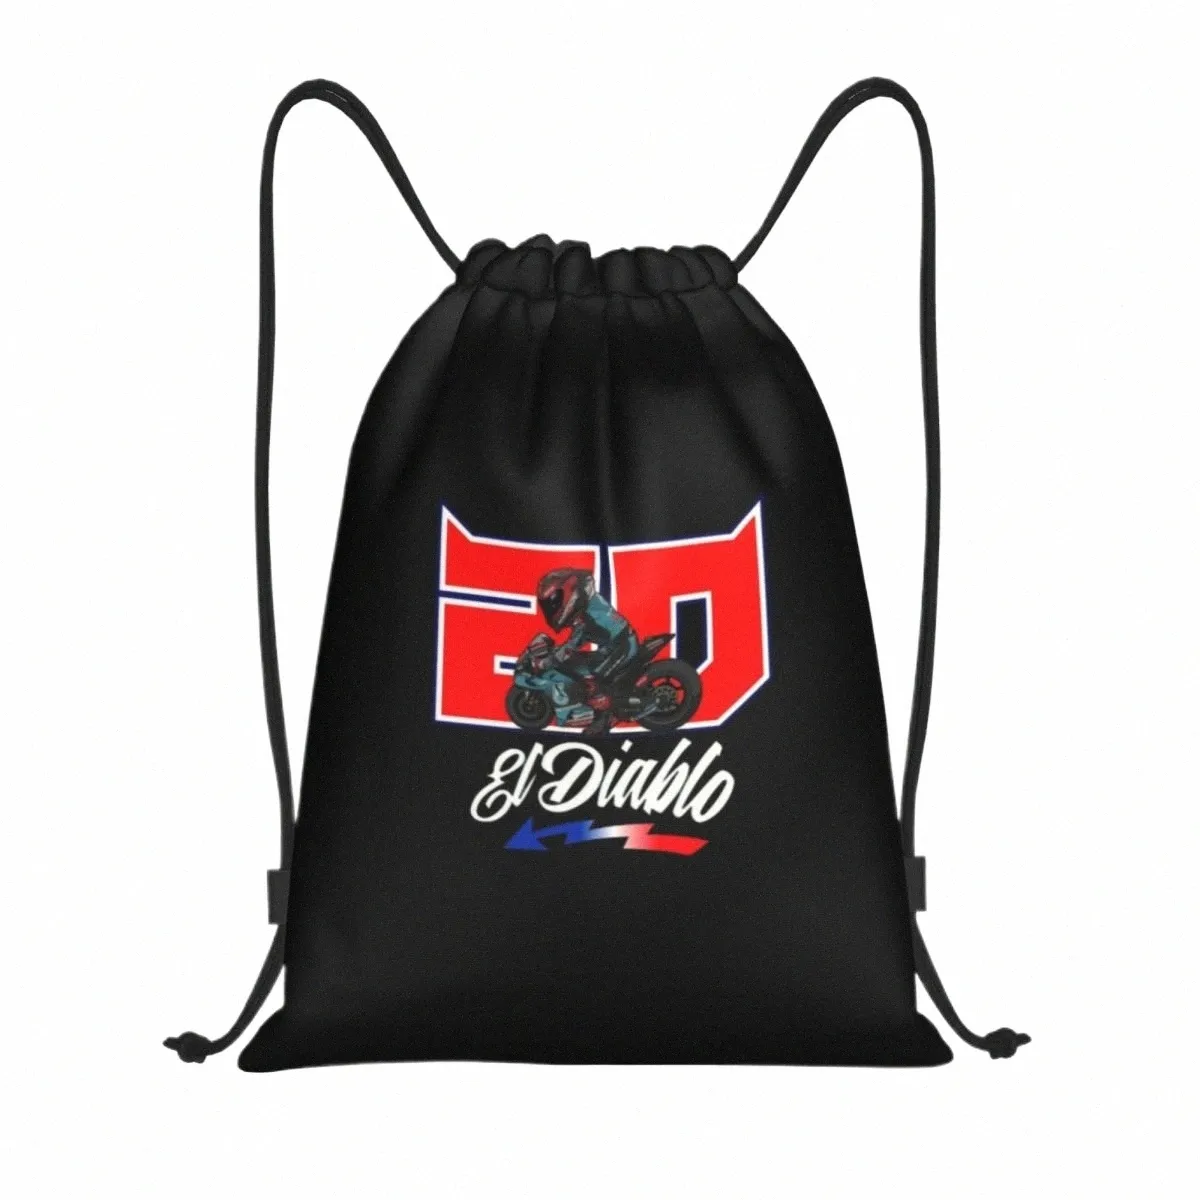 custom Fabio Quartararo Drawstring Backpack Bags Women Men Lightweight Motorcycle Rider Gym Sports Sackpack Sacks for Traveling Z22d#